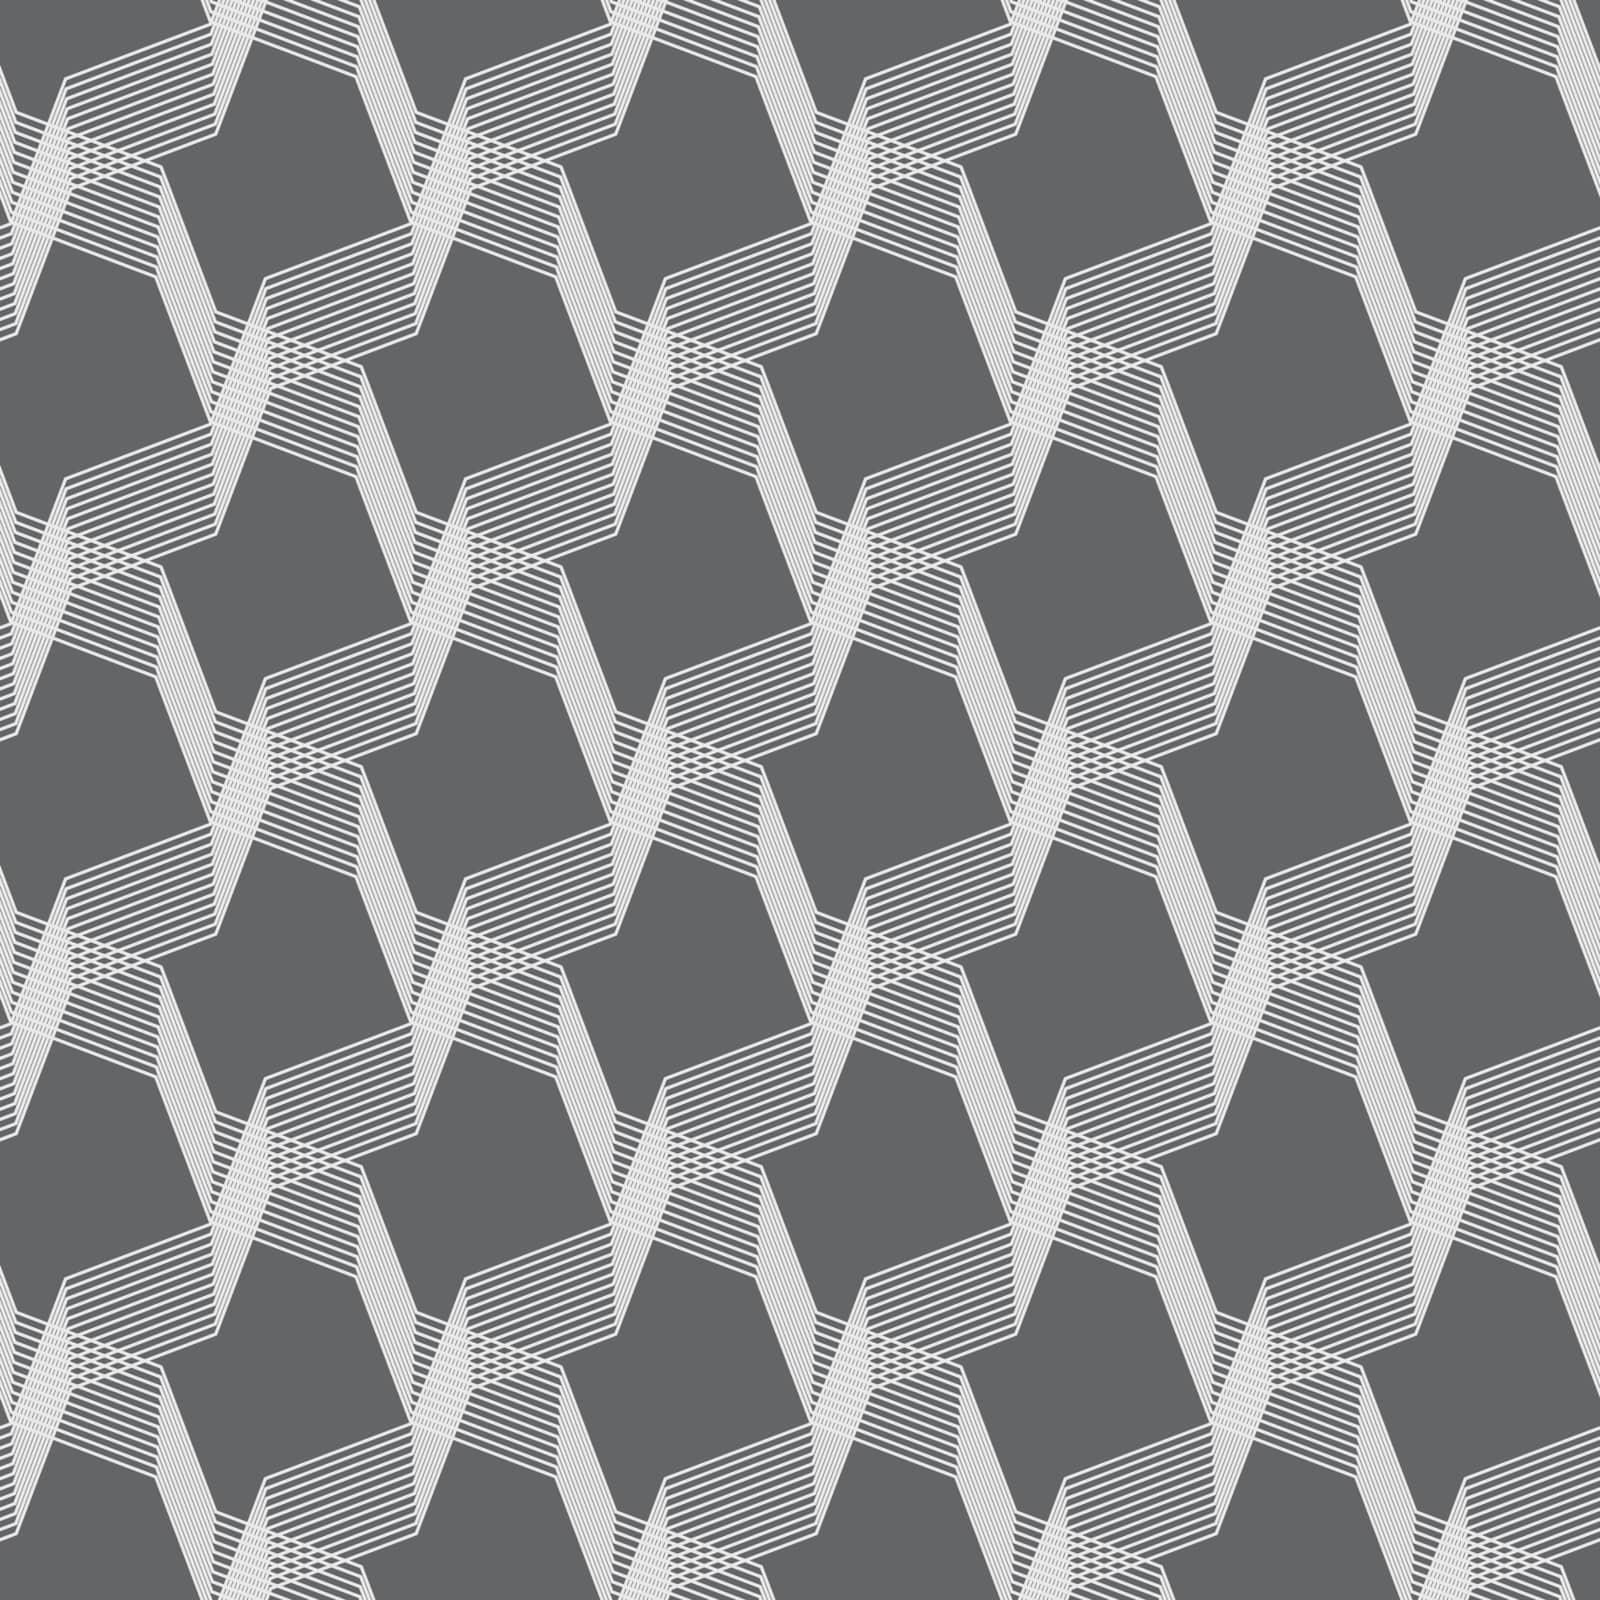 Seamless stylish geometric background. Modern abstract pattern. Flat monochrome design.Monochrome pattern with gray intersecting thin lines on gray.